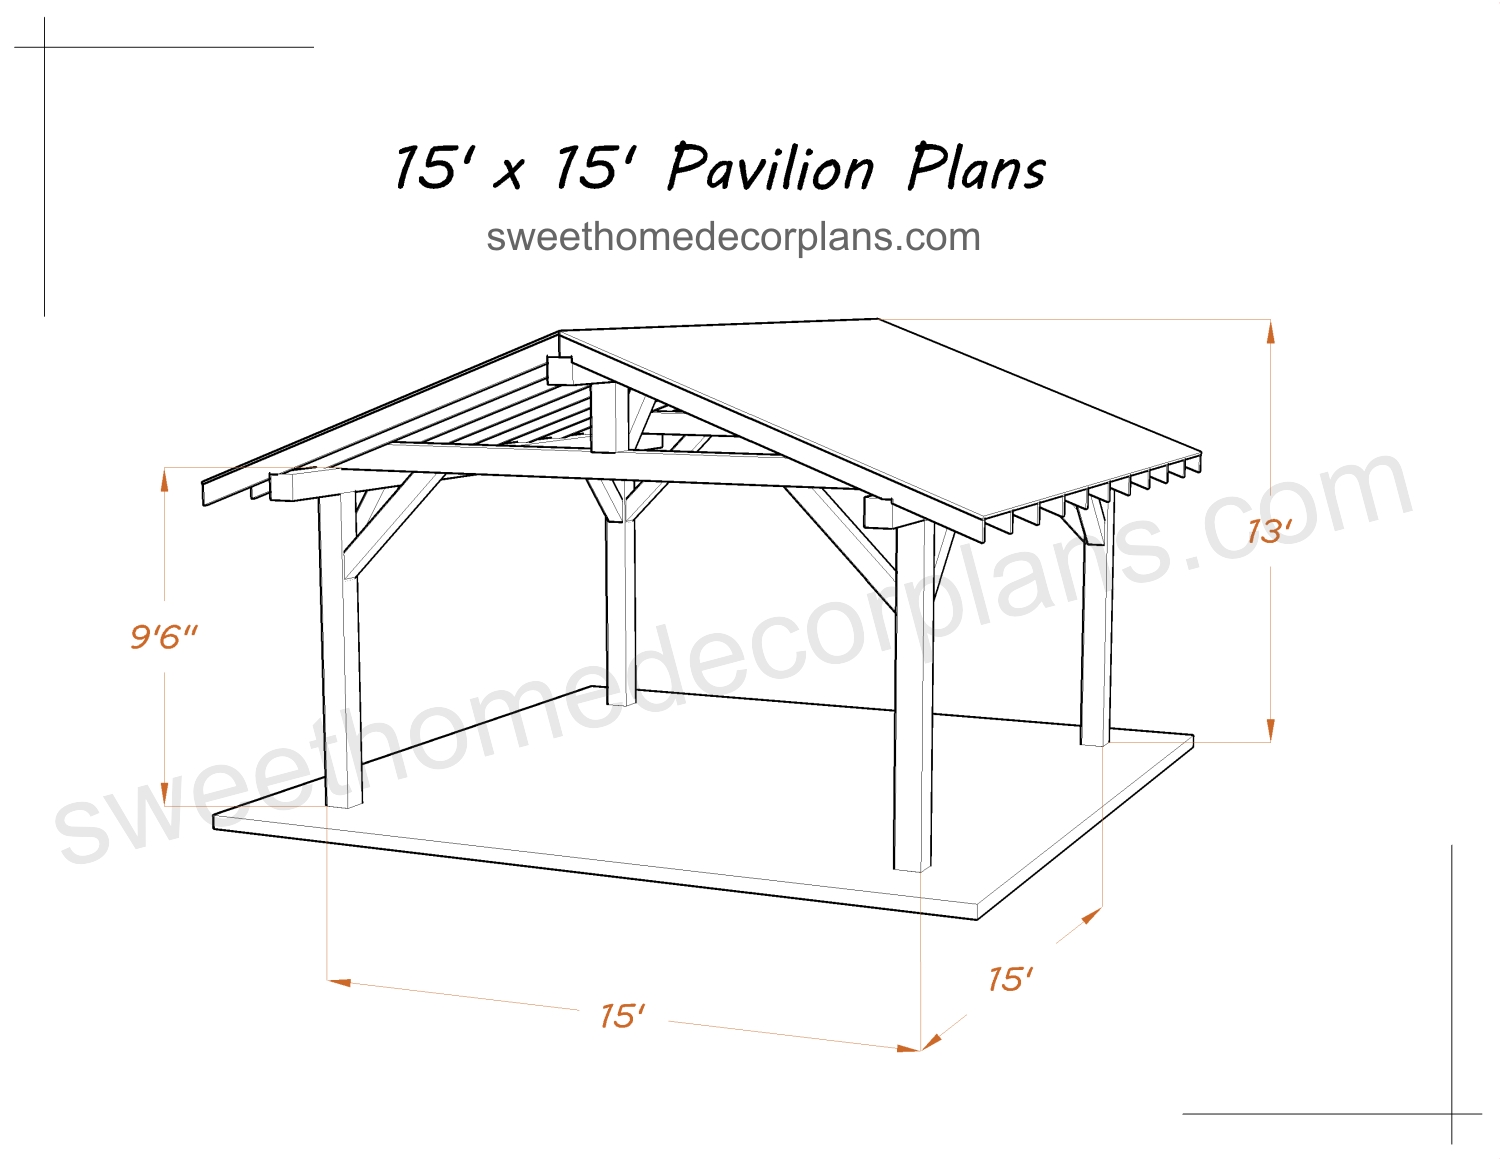 Diy-15-х-15-gable-pavilion-plans-carport-patio